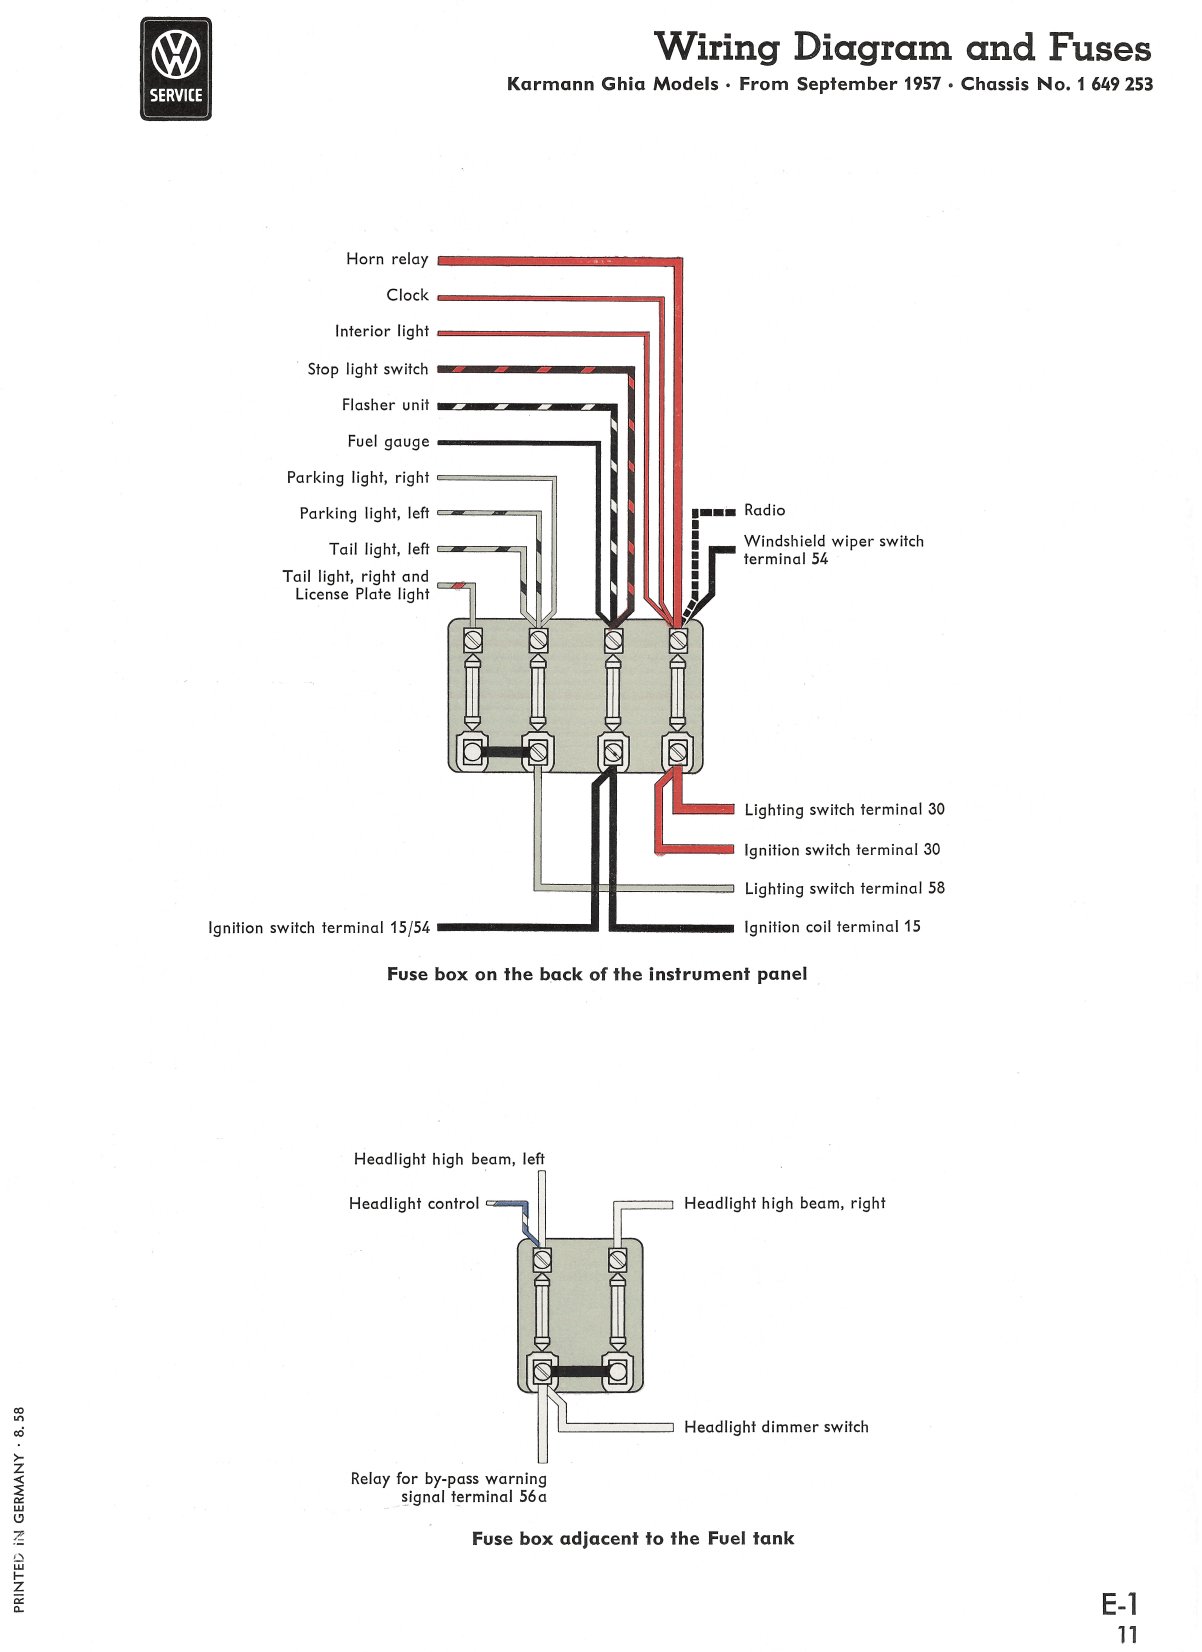 TheSamba.com :: Karmann Ghia Wiring Diagrams 1967 vw wiring diagram 